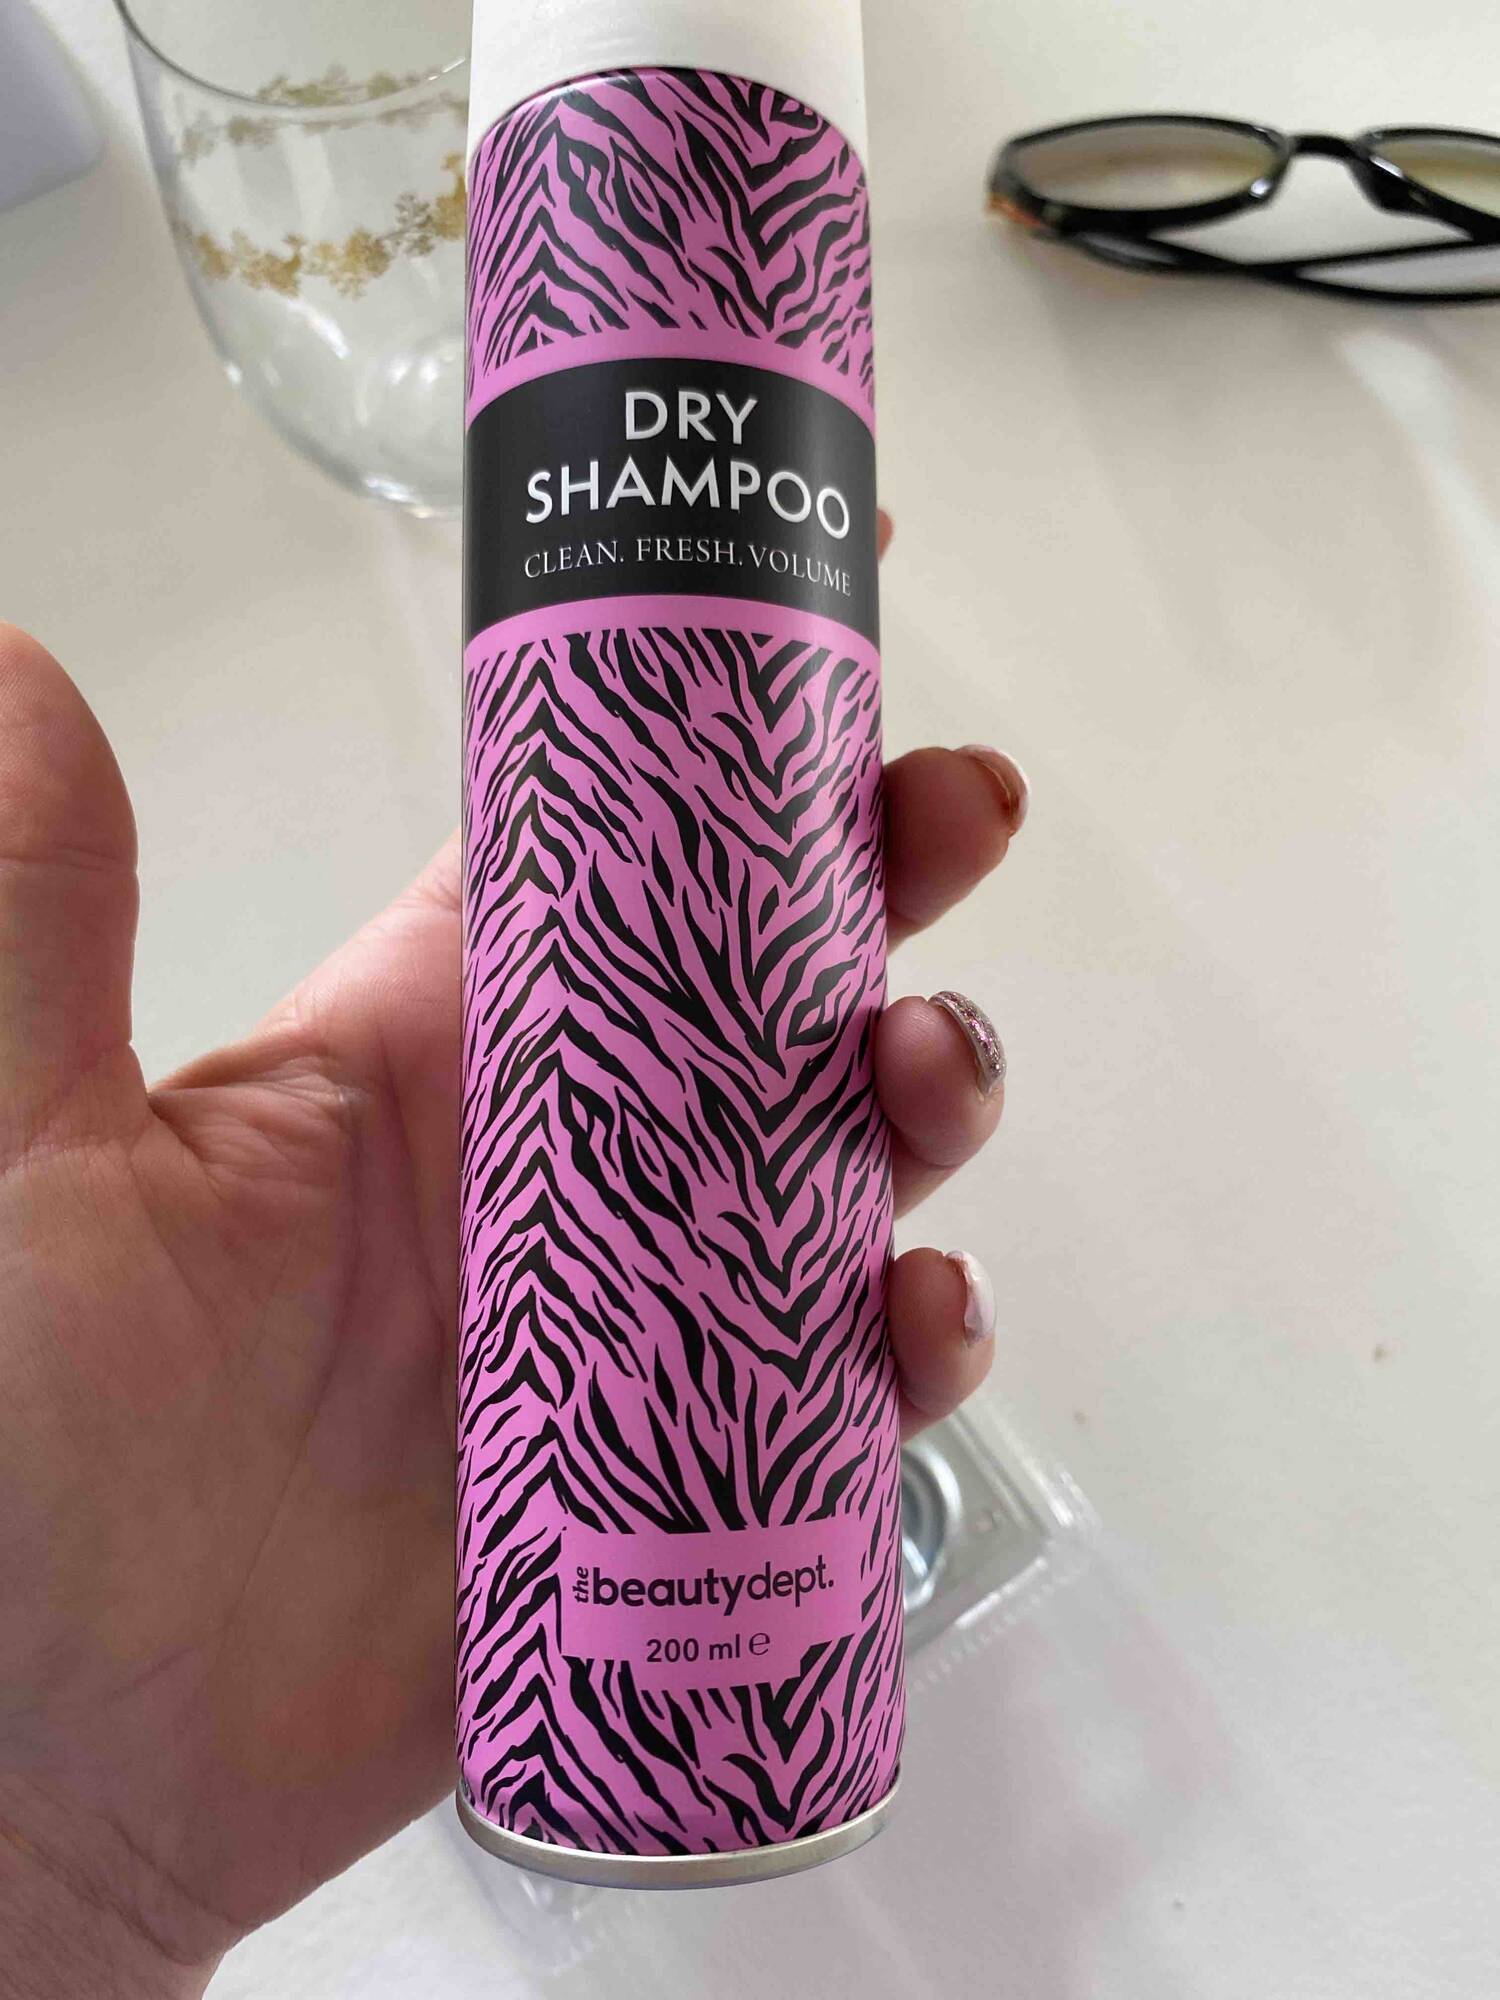 THE BEAUTY DEPT - Dry Shampoo clean fresh volume